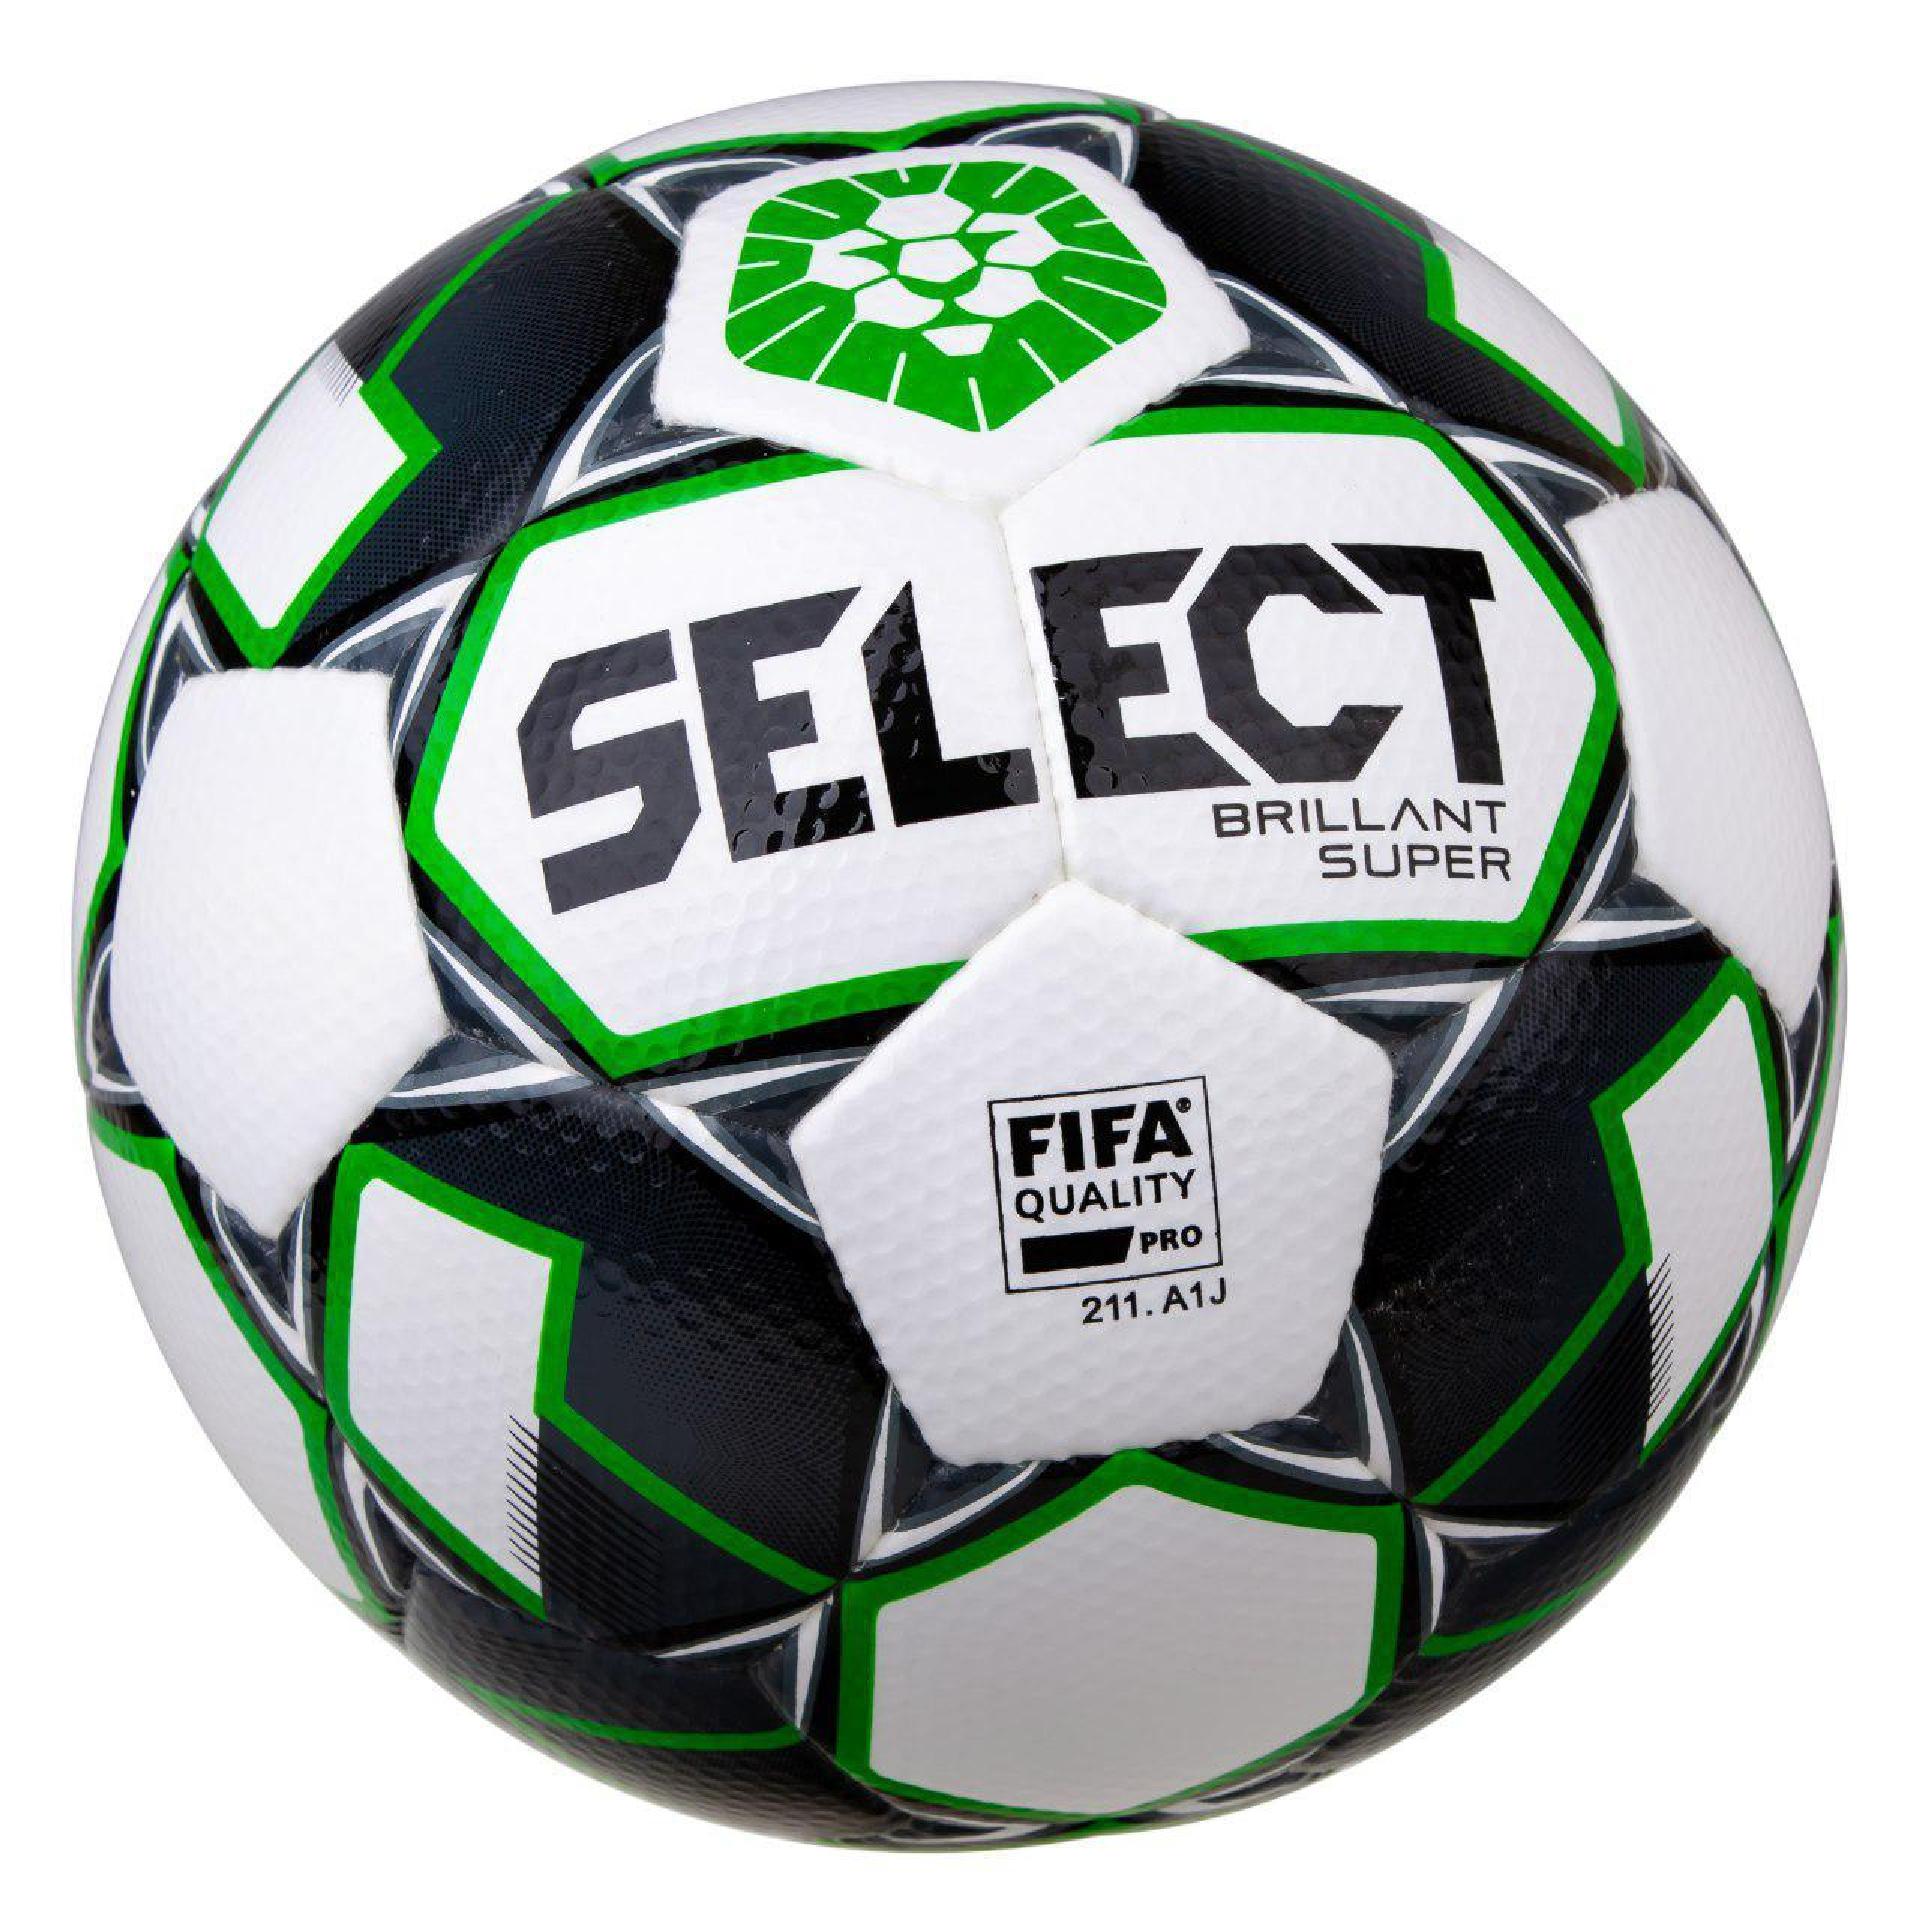 Мяч fifa quality pro. Select мяч FIFA brillant super Brilliant. Select brillant super TB, мяч футбольный ((001) бел/оранж/син, 5) 810316.001. 811322-001 Мяч select Brilliant super. Мяч футбольный select brillant super FIFA 2015.